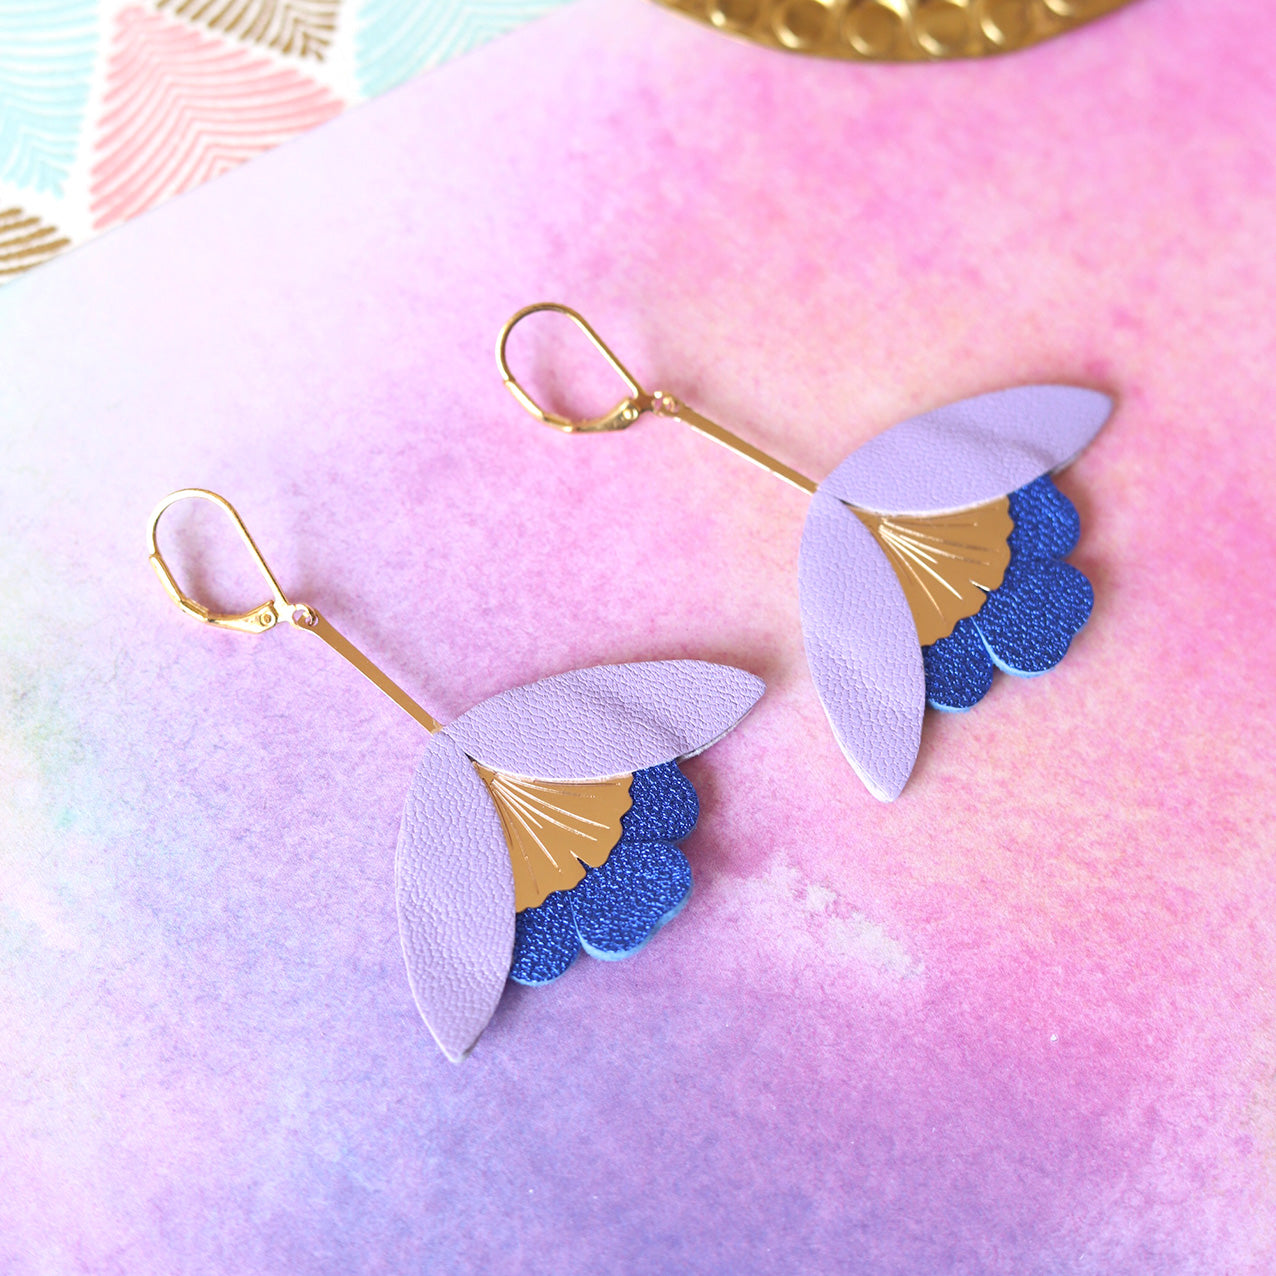 Ginkgo Flower earrings in mauve and metallic ultramarine blue leather